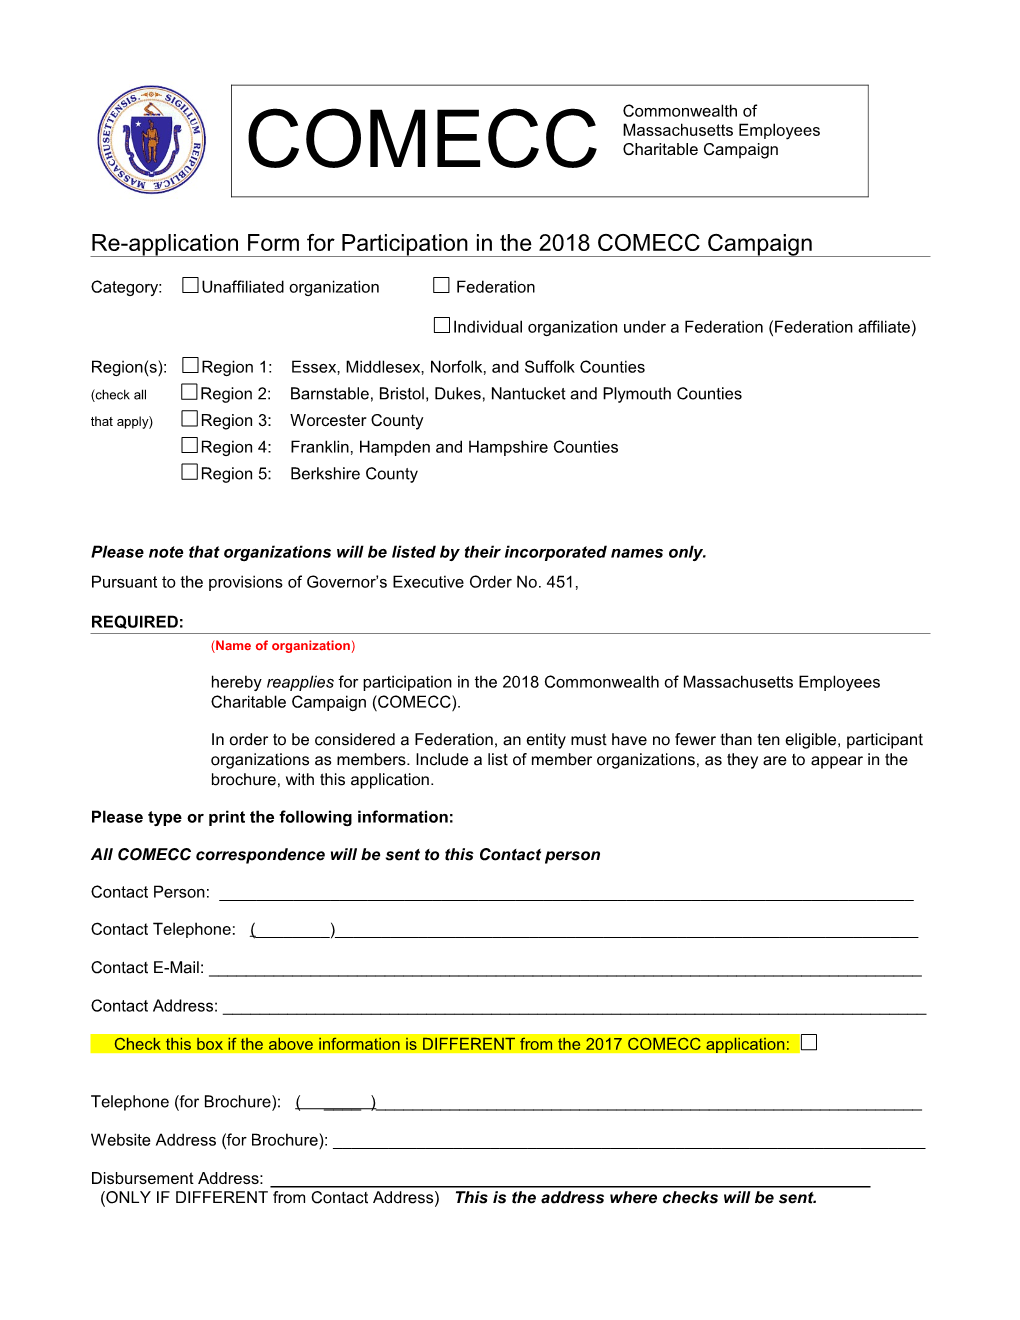 Application Form for Participation in the 2003 COMECC Campaign